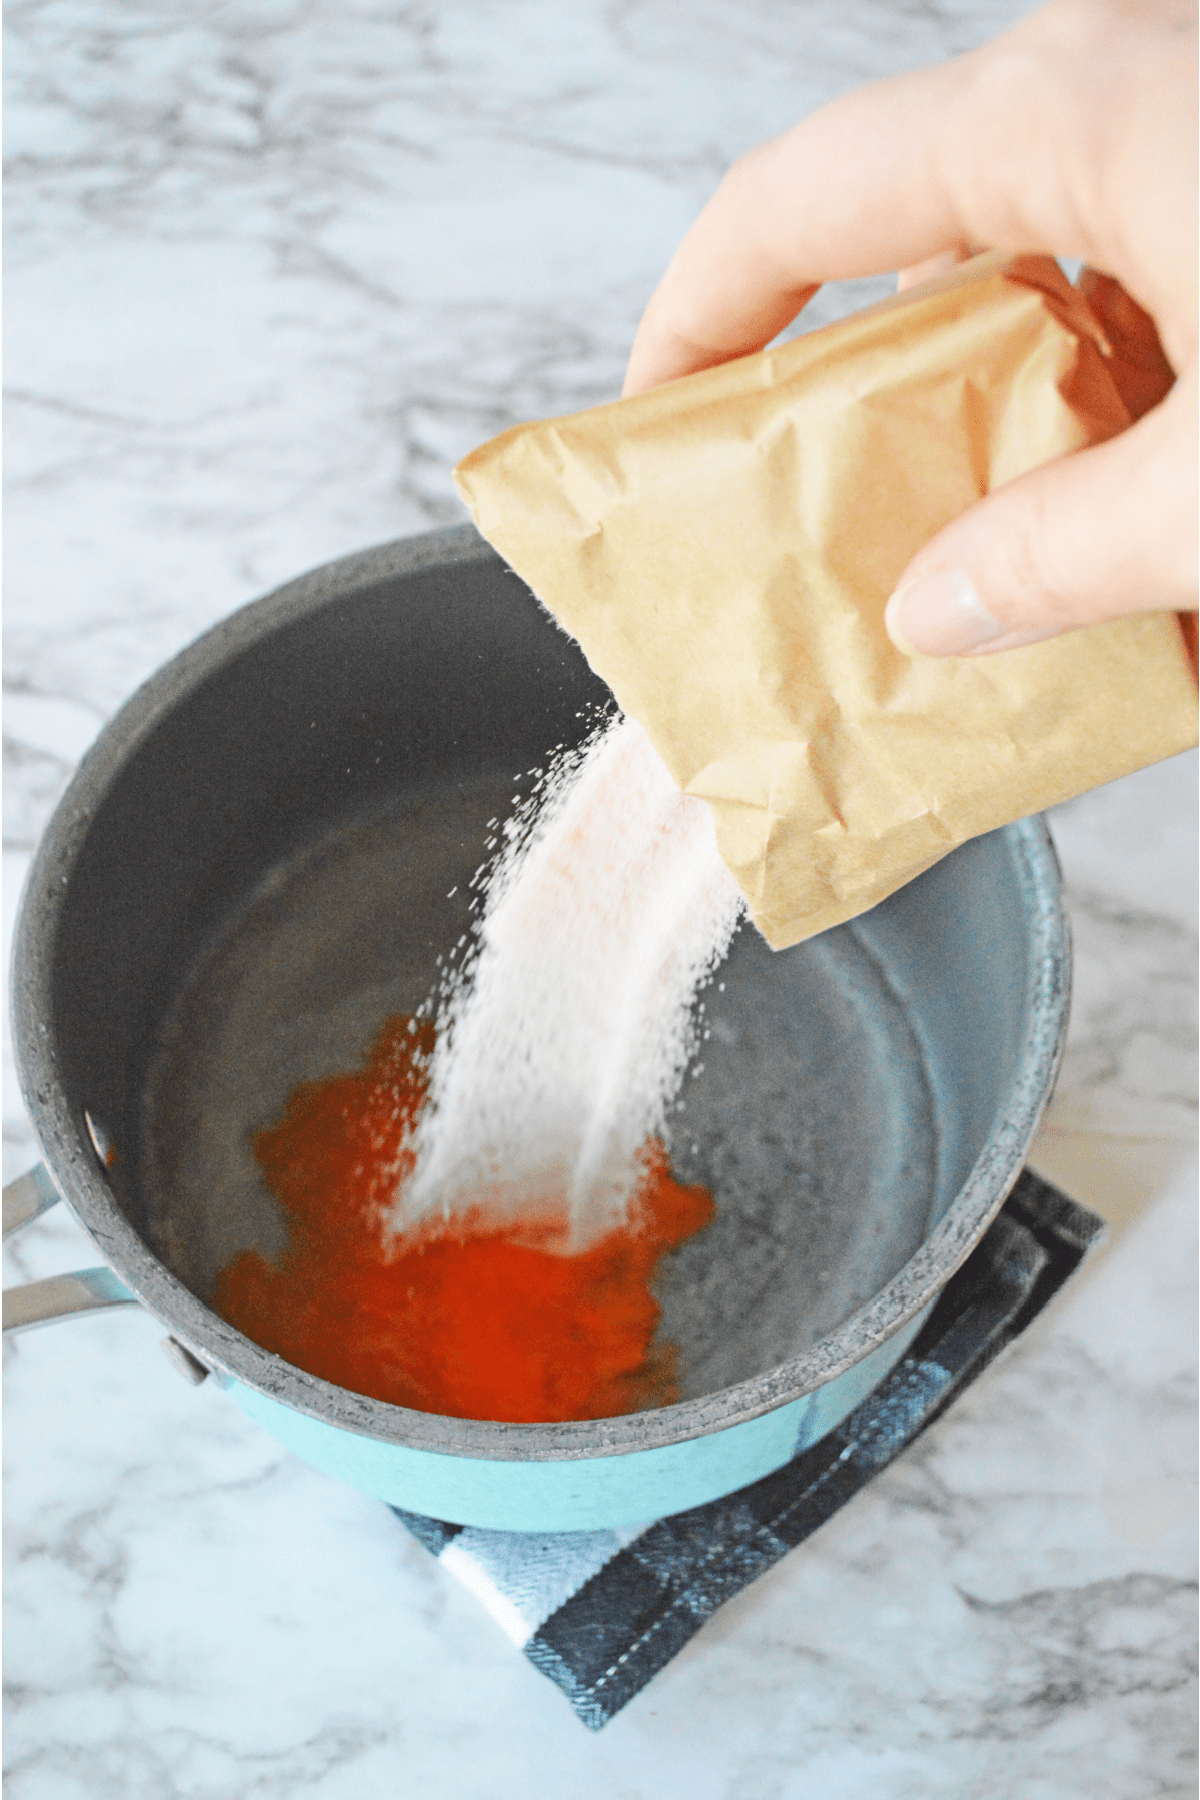 Orange jello poured into saucepan with water